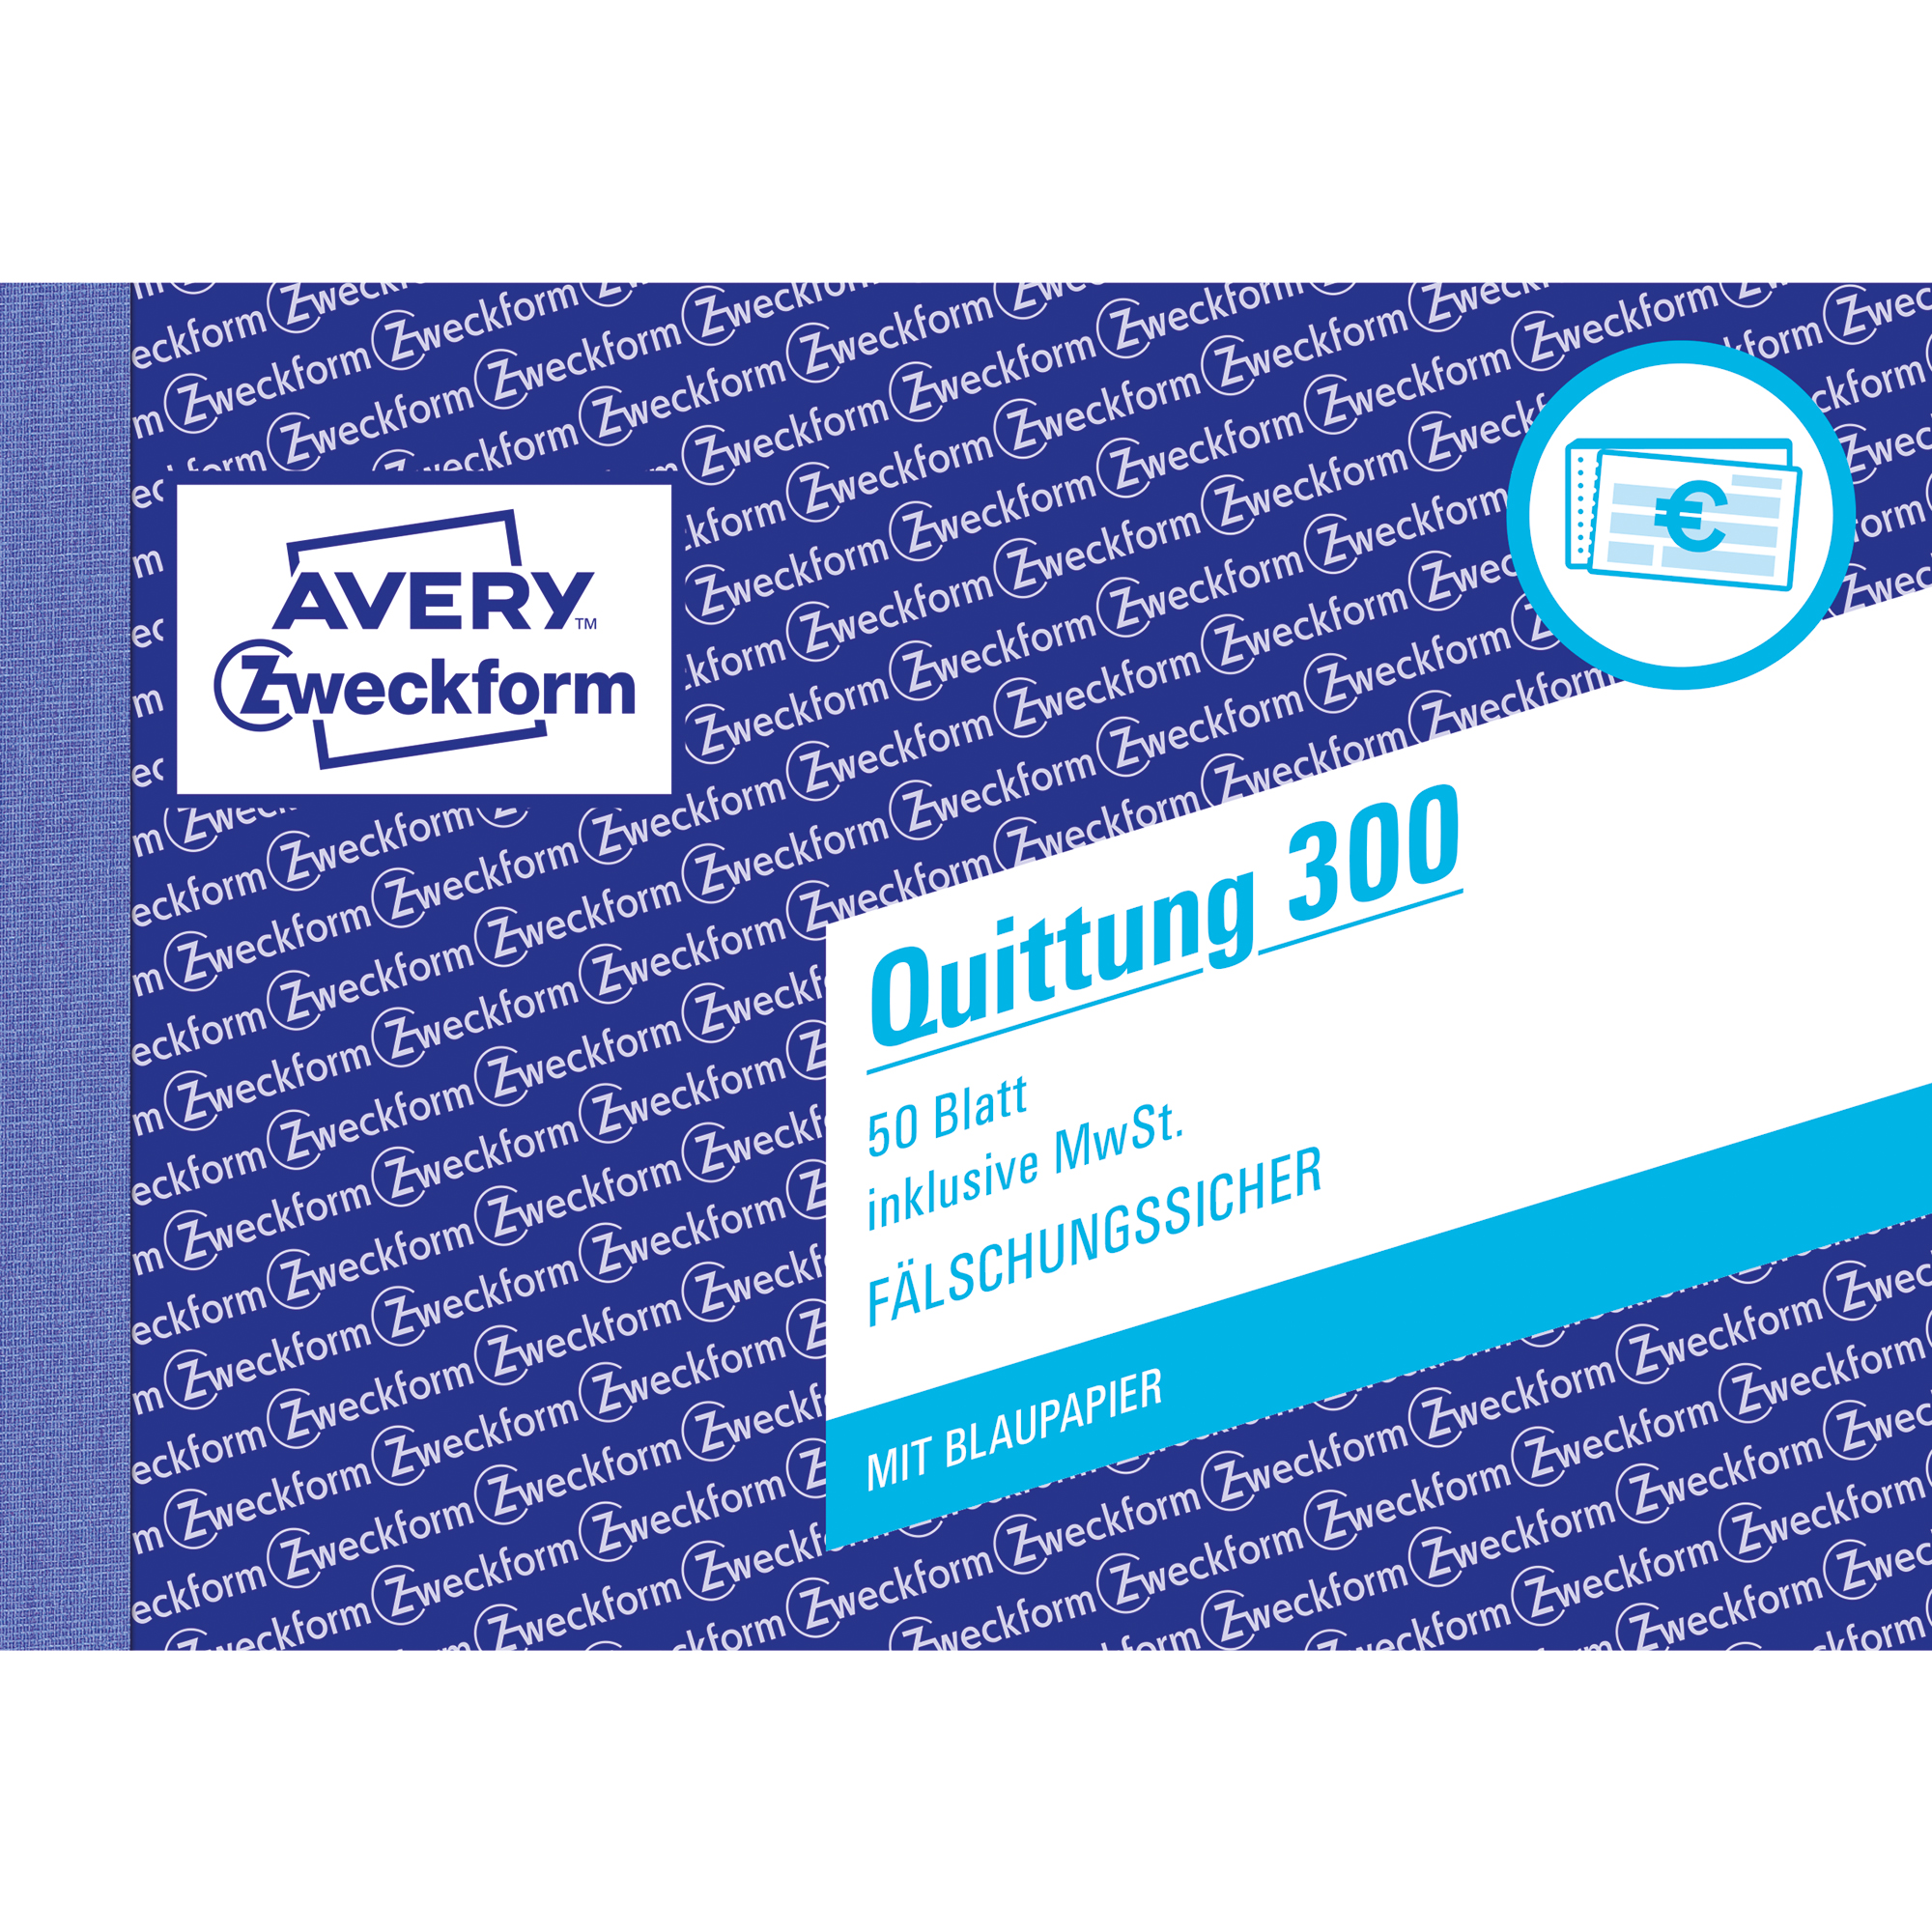 Avery Zweckform Quittung 300